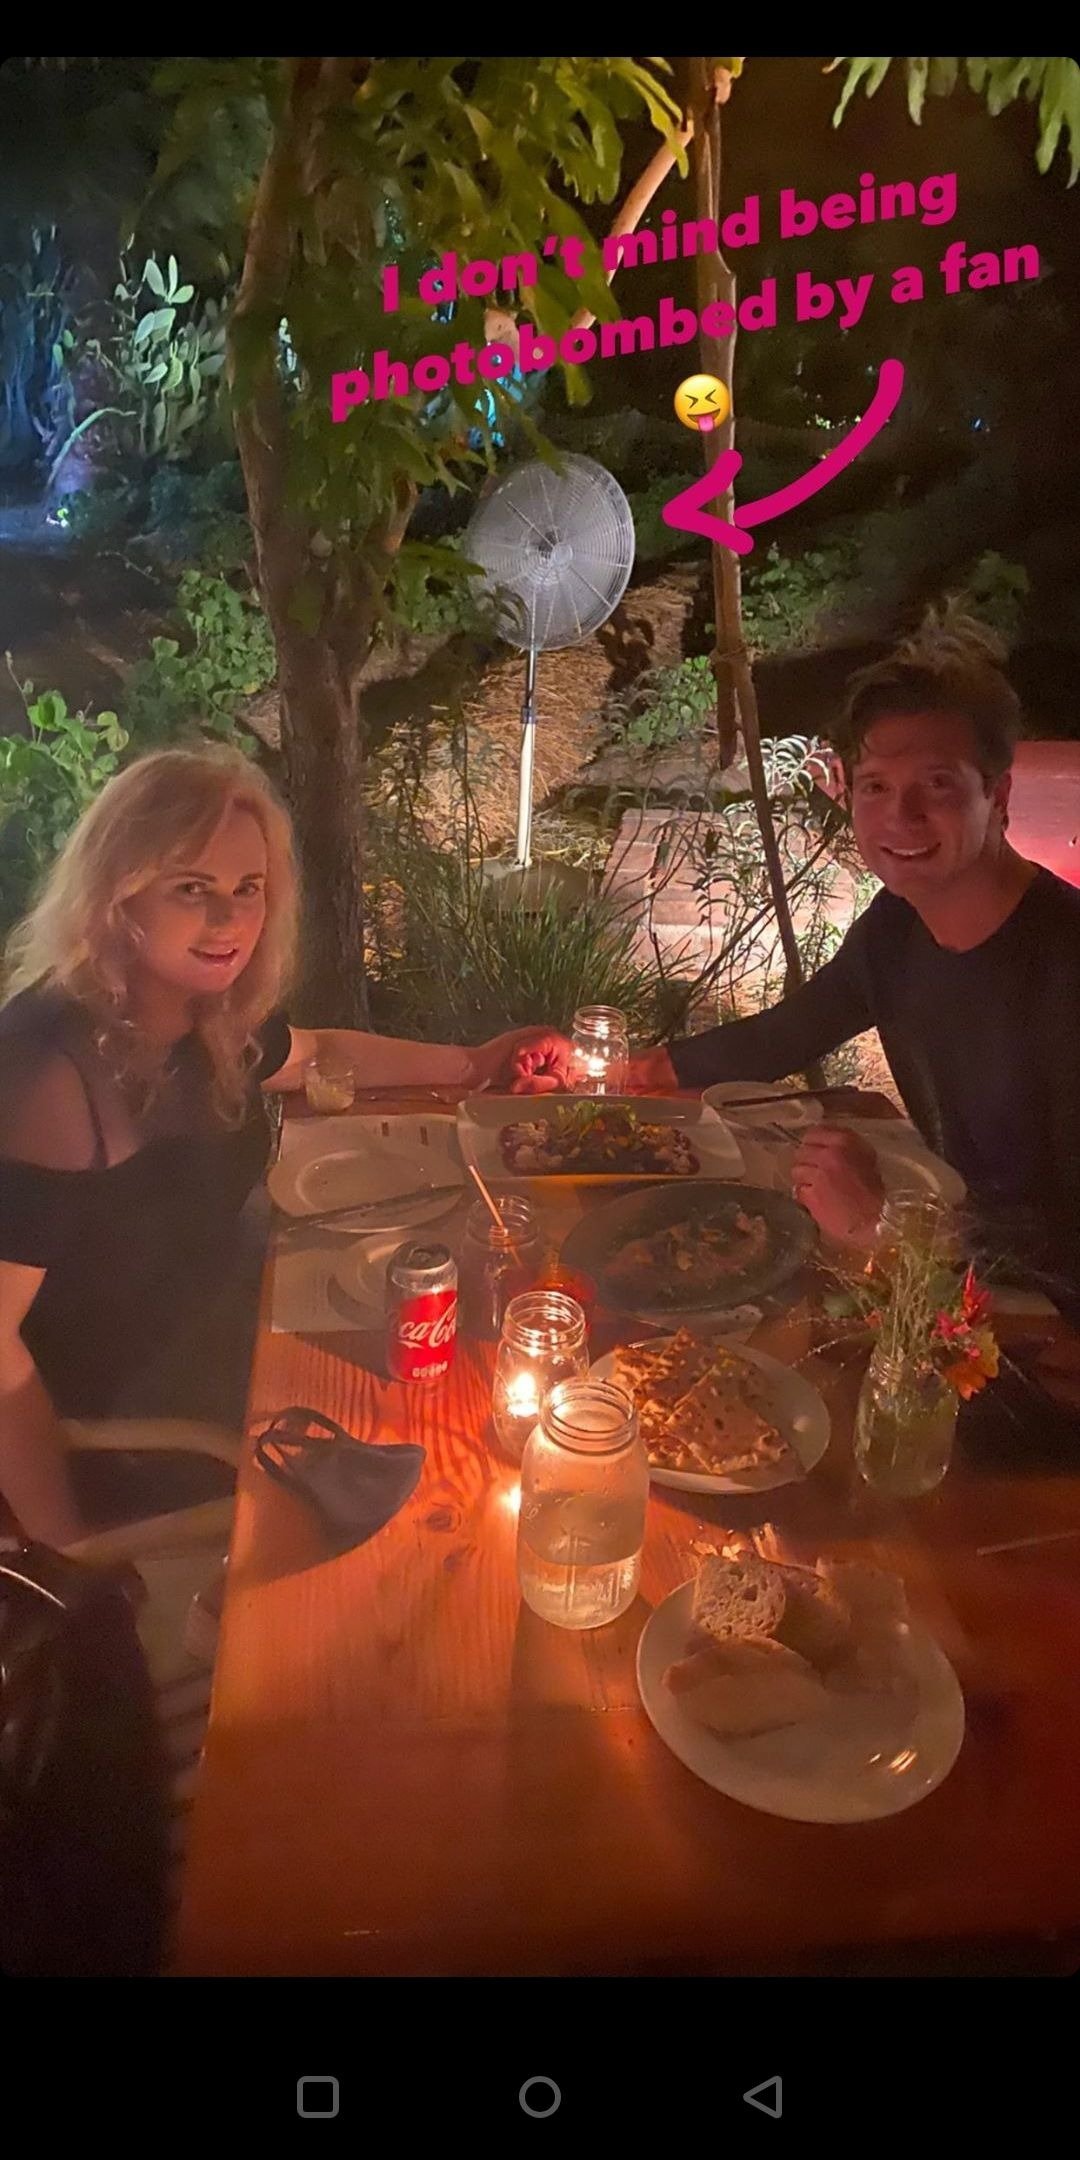 Rebel Wilson updates fans on her date night with boyfriend Jacob Busch. | Source: InstagramStories/rebelwilson